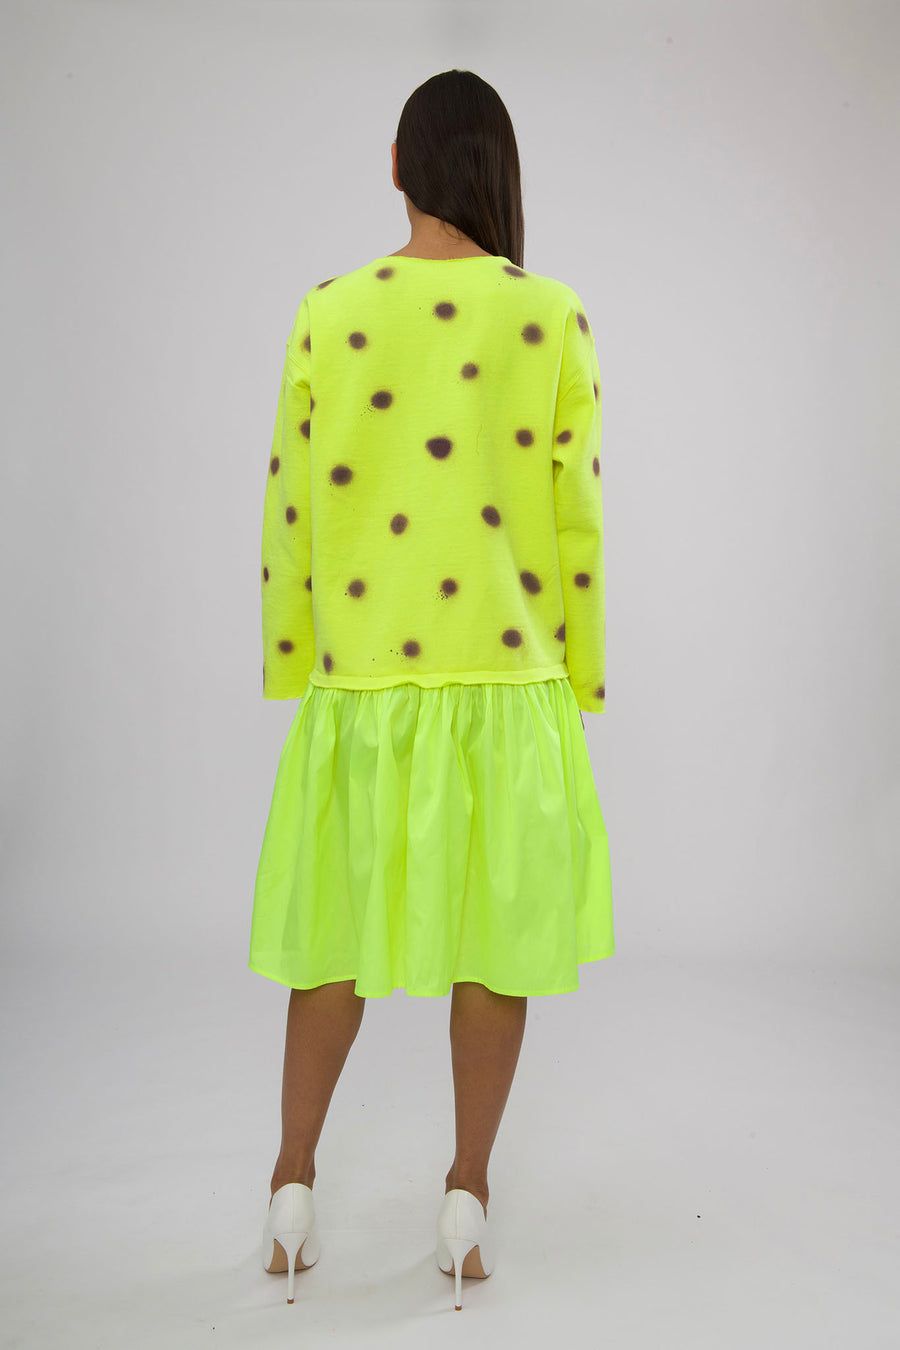 BATSHEVA - Neon Yellow Sweatshirt Dress with Purple Polka Dots and Rhinestones